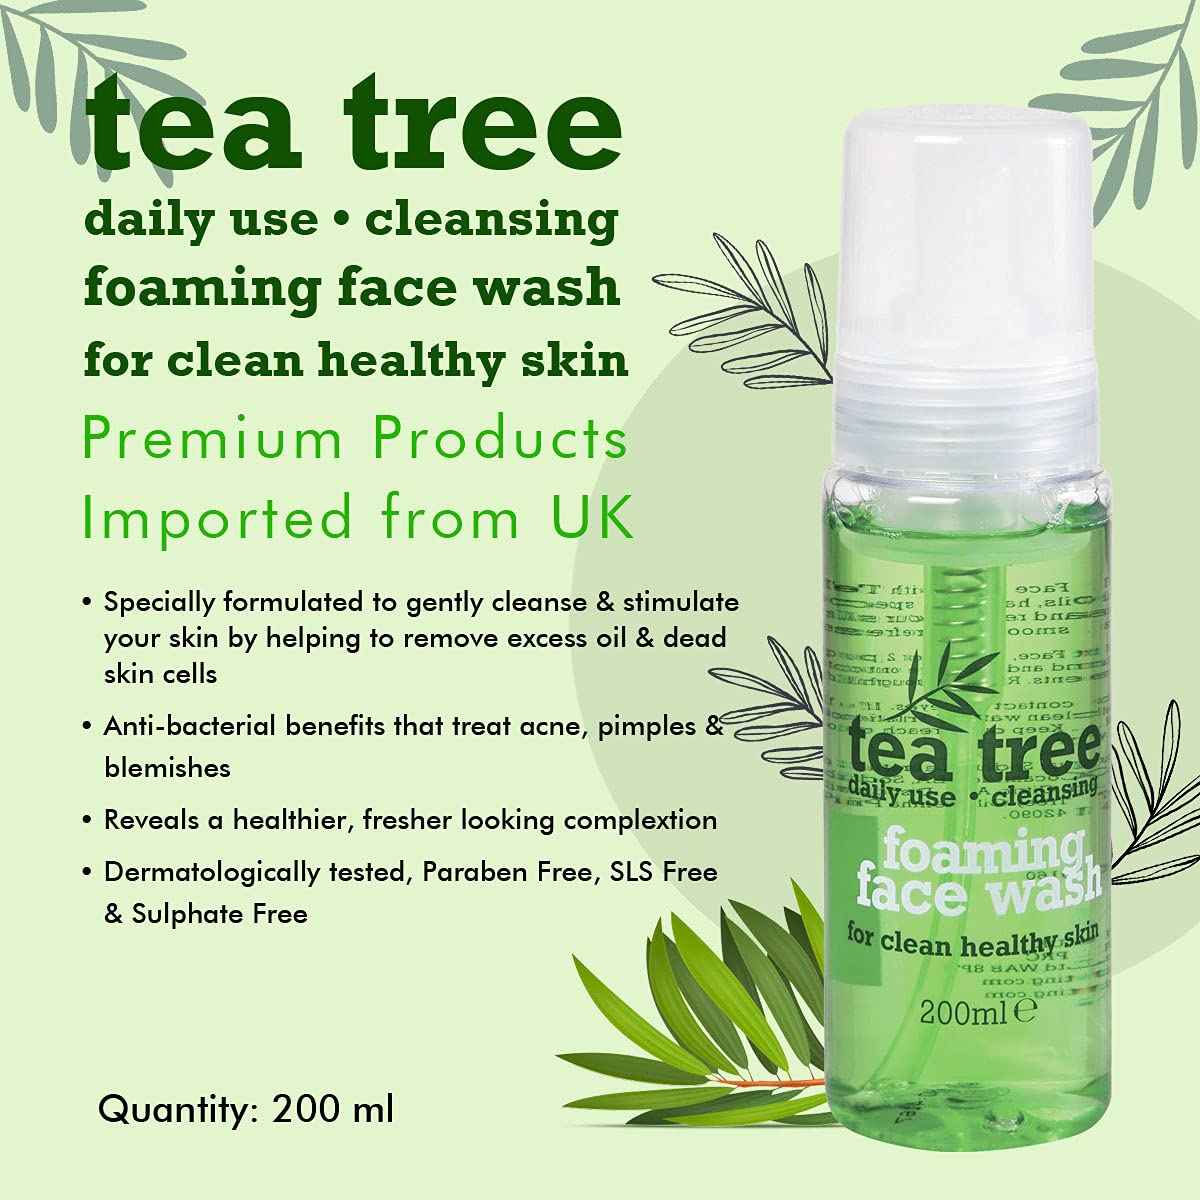 Xpel Tea Tree Foaming Face Wash (200ml)